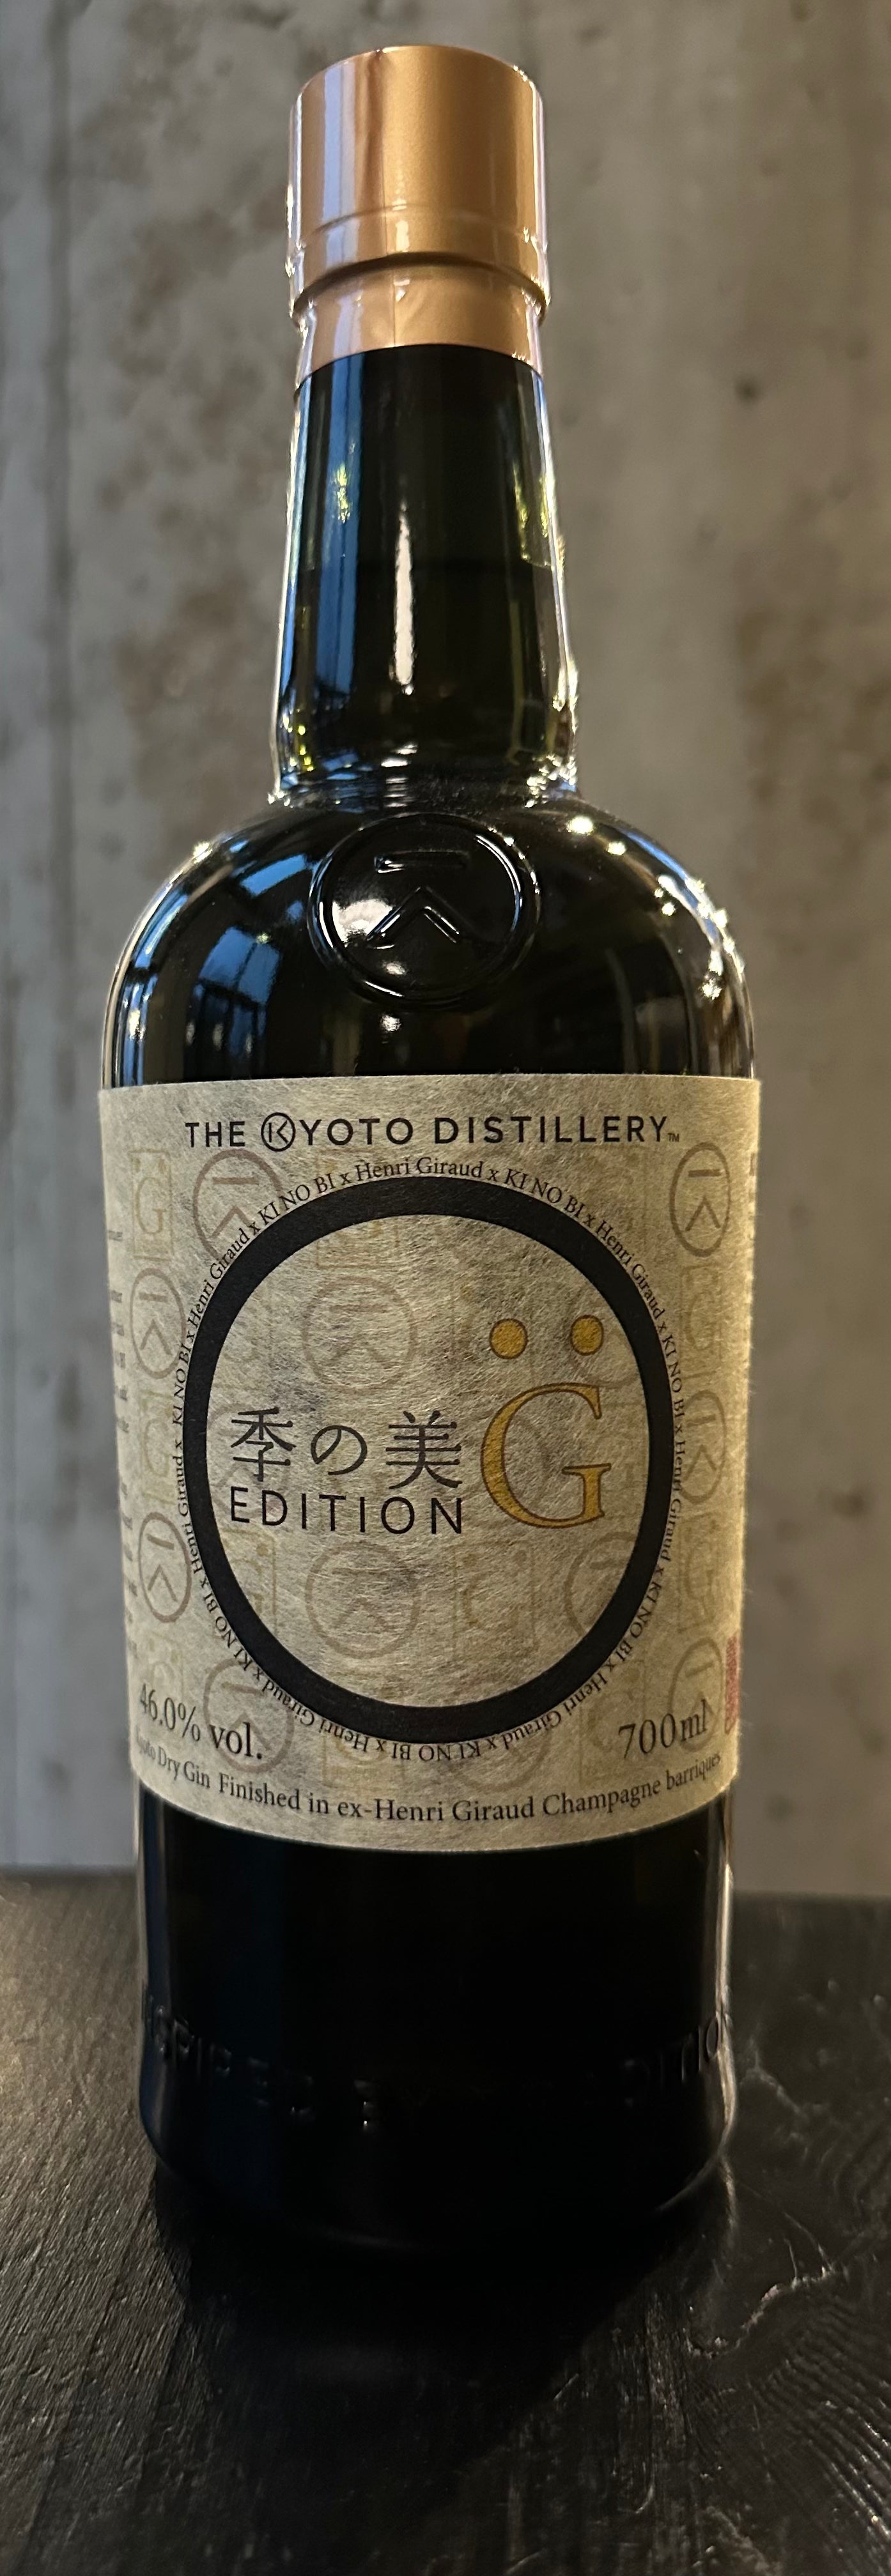 Kyoto Distillery KI NO BI "Edition G" Champagne Cask-Aged Dry Gin